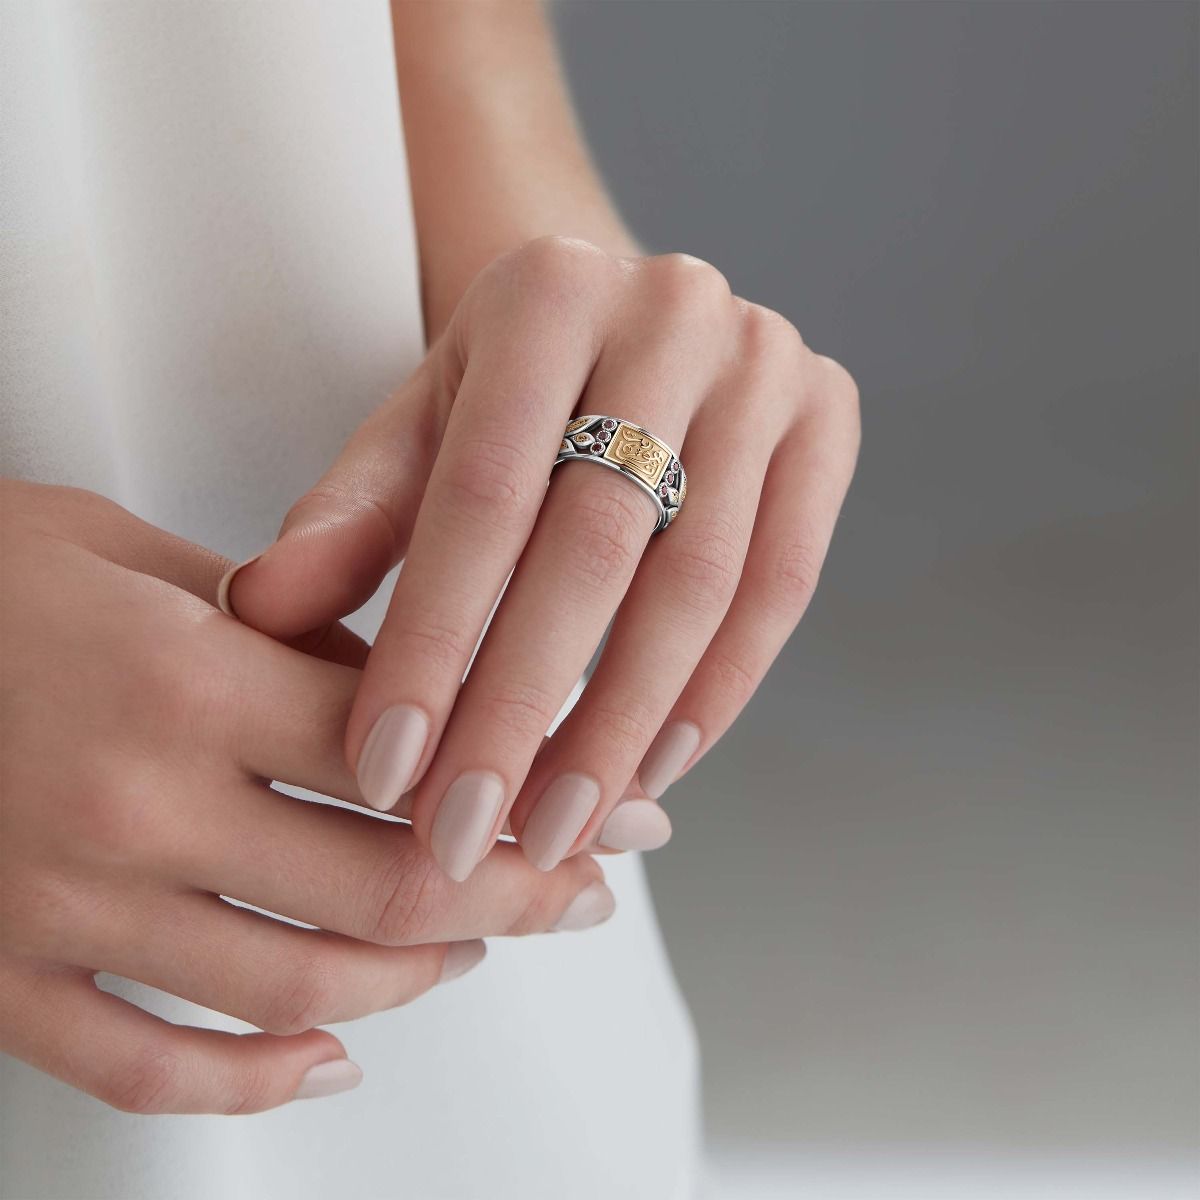 Sayed Darwish Ring by Azza Fahmy - Rhodolite - Champagne Diamonds - Designer Rings